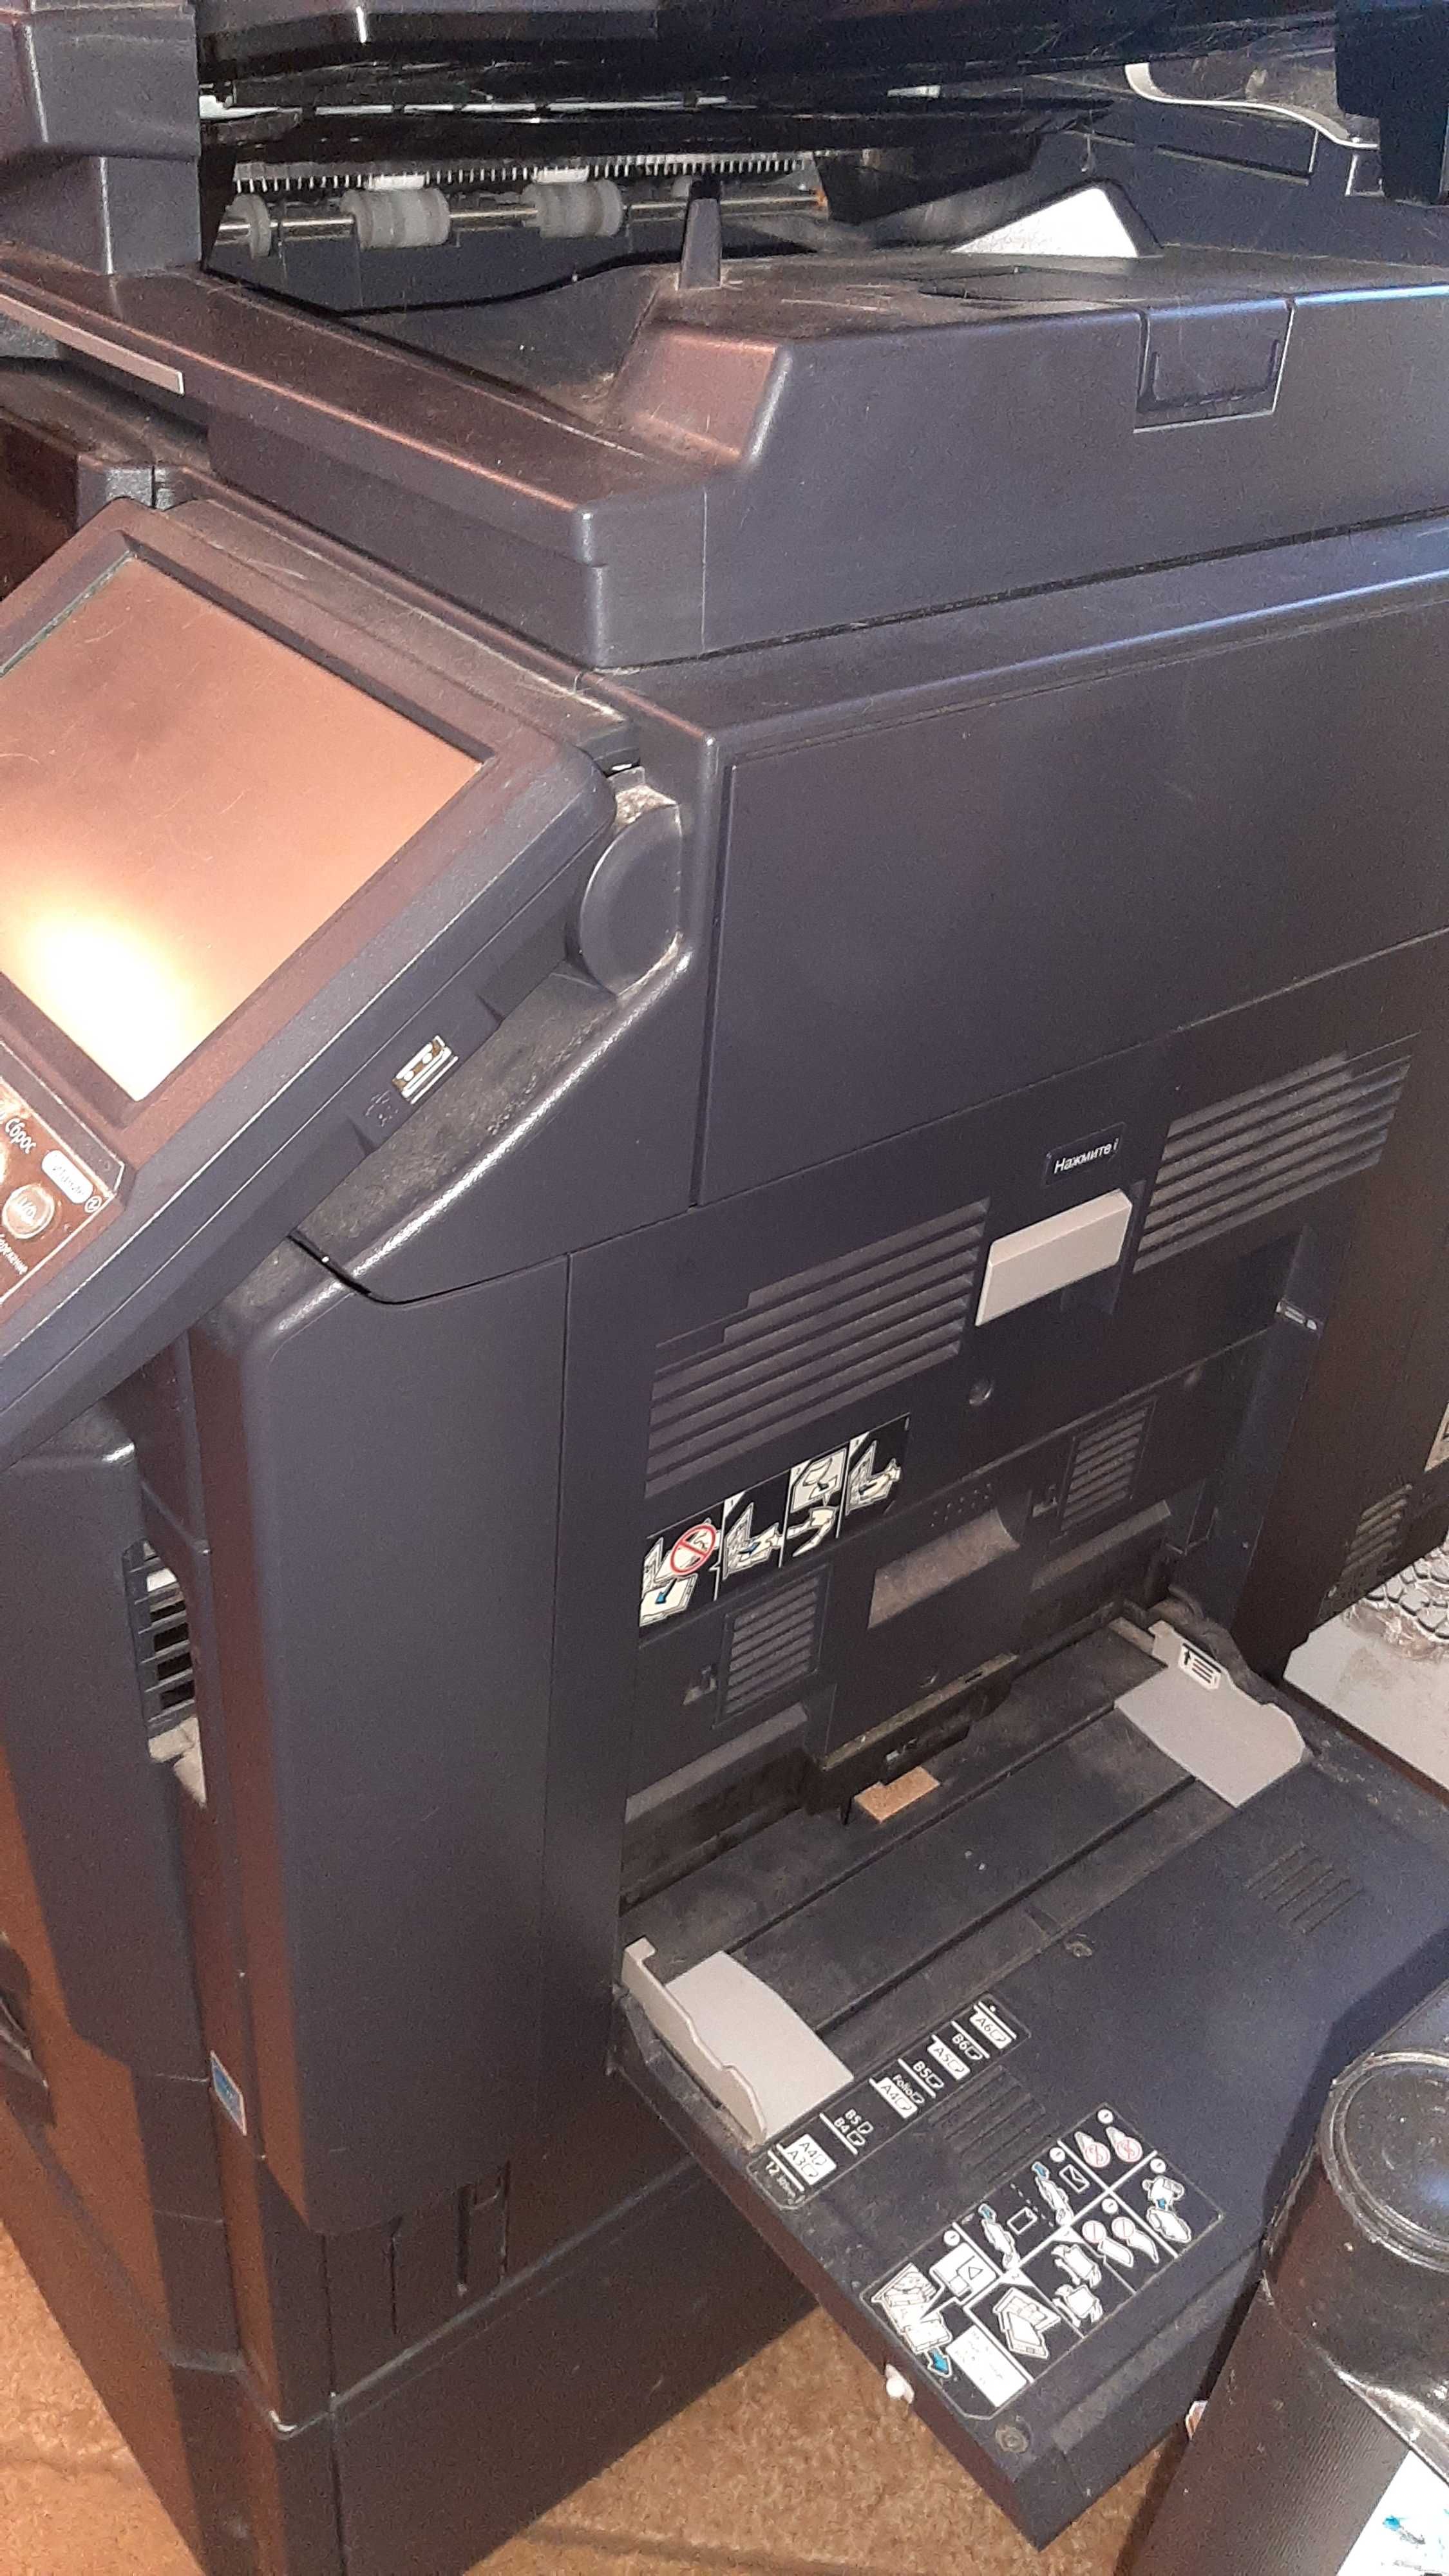 Impressora fotocopiadora multifunções A3 cores Kyocera Taskalfa 3551ci